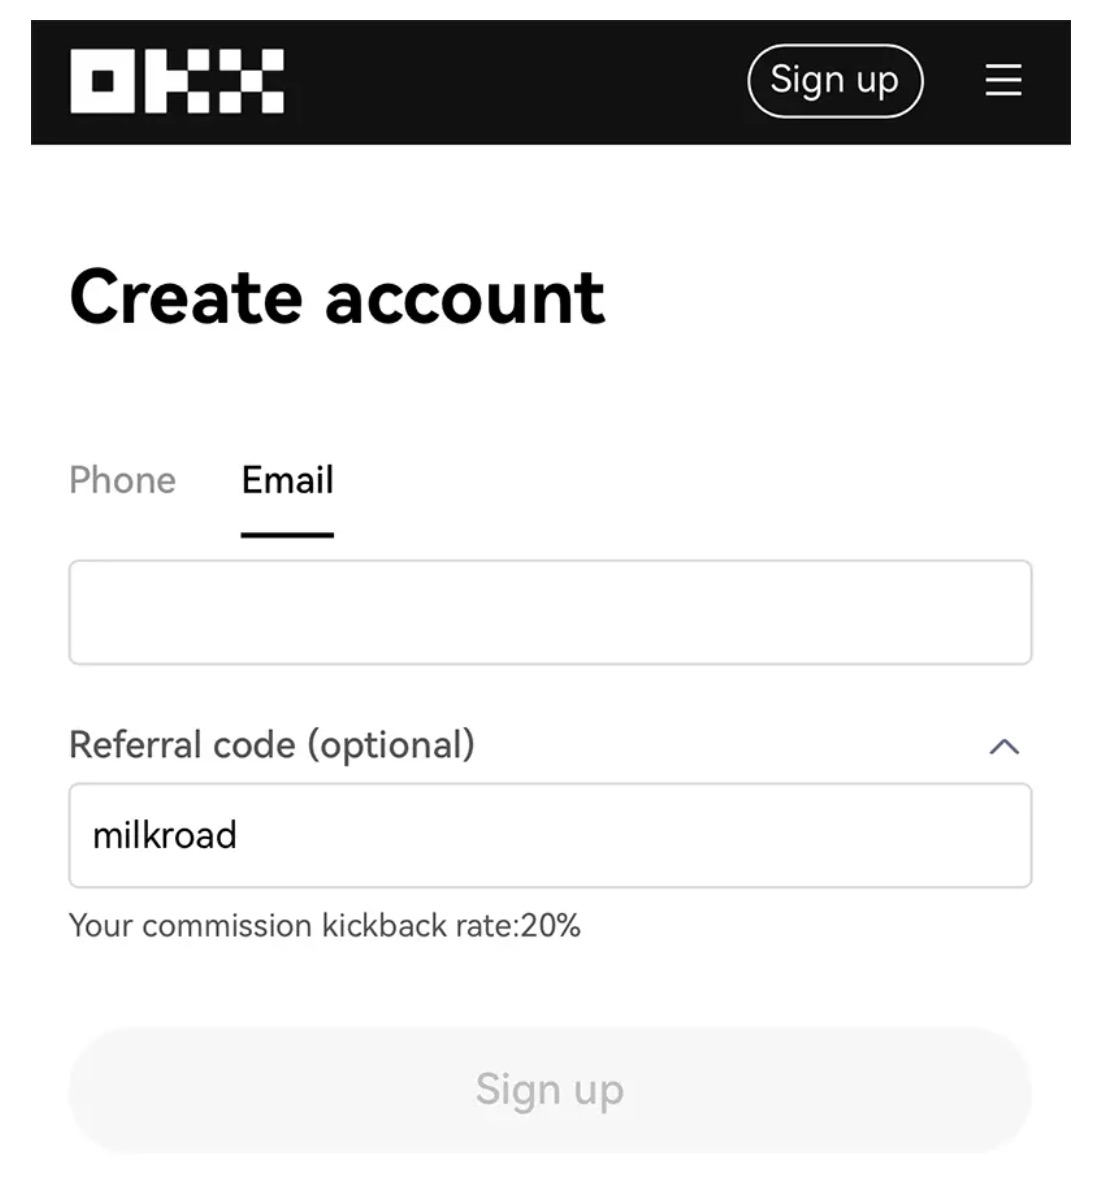 OKX.com sign-up screenshot for kickback bonus